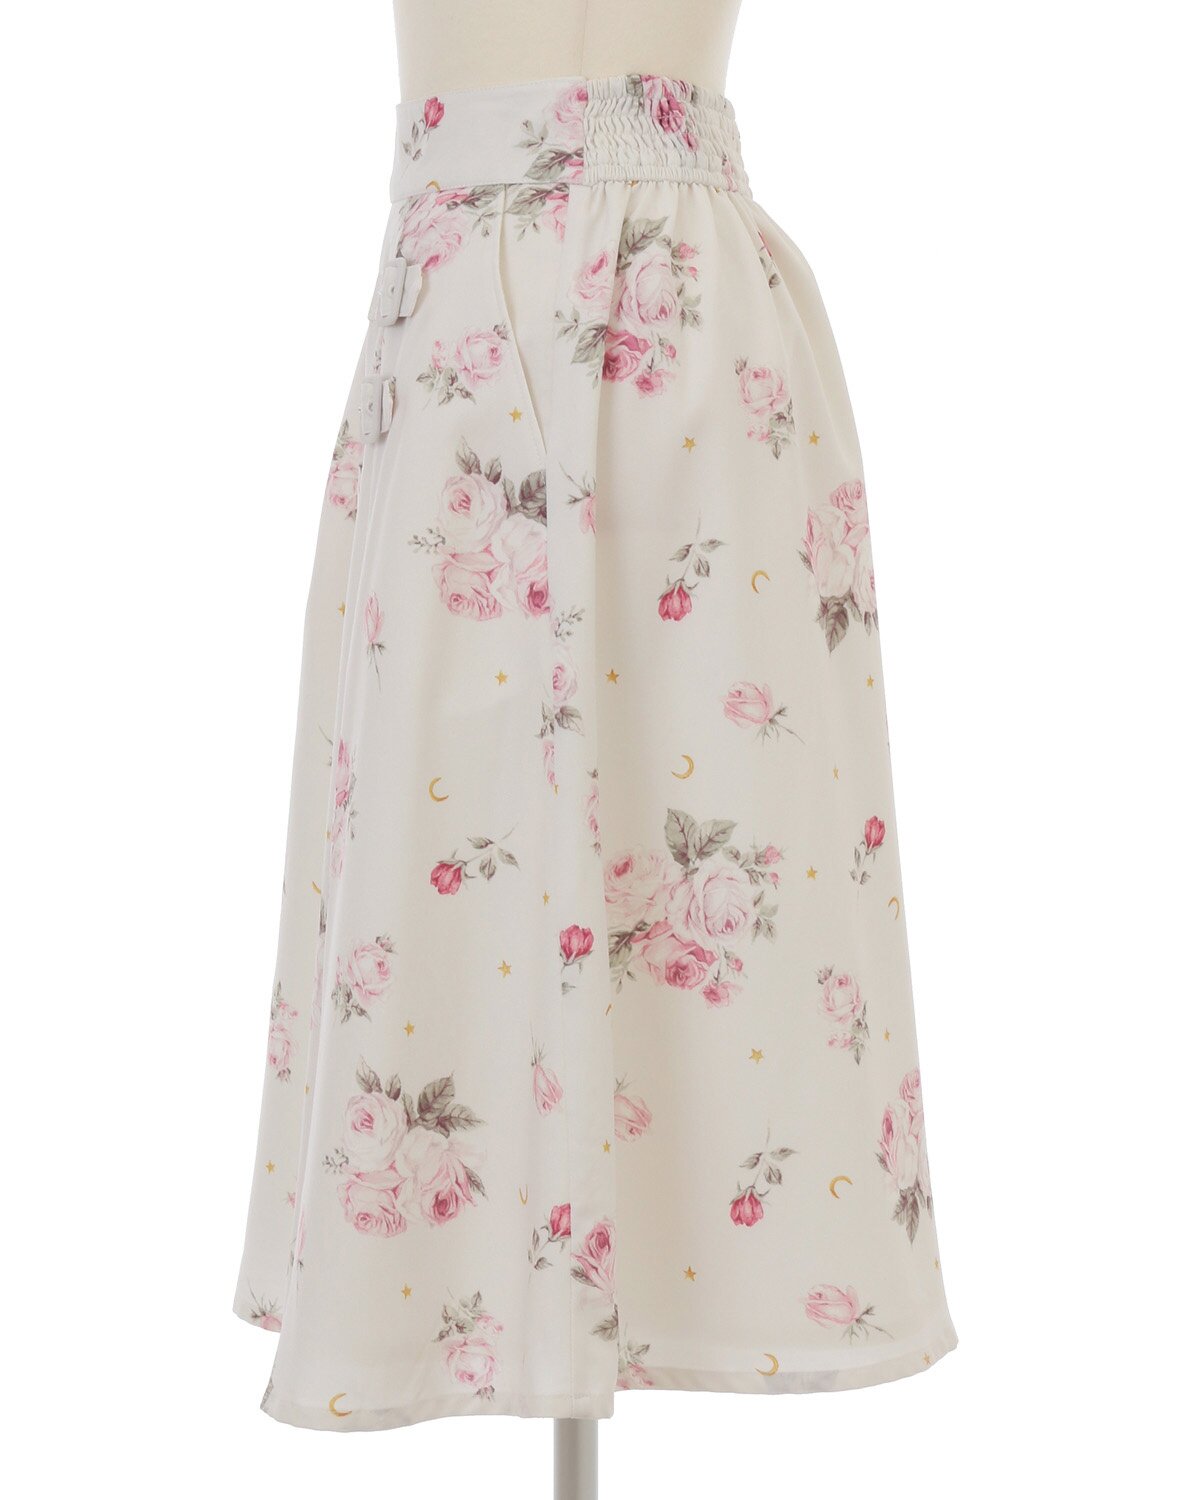 LIZ LISA Starry Sky Rose Skirt: LIZ LISA - Tokyo Otaku Mode (TOM)